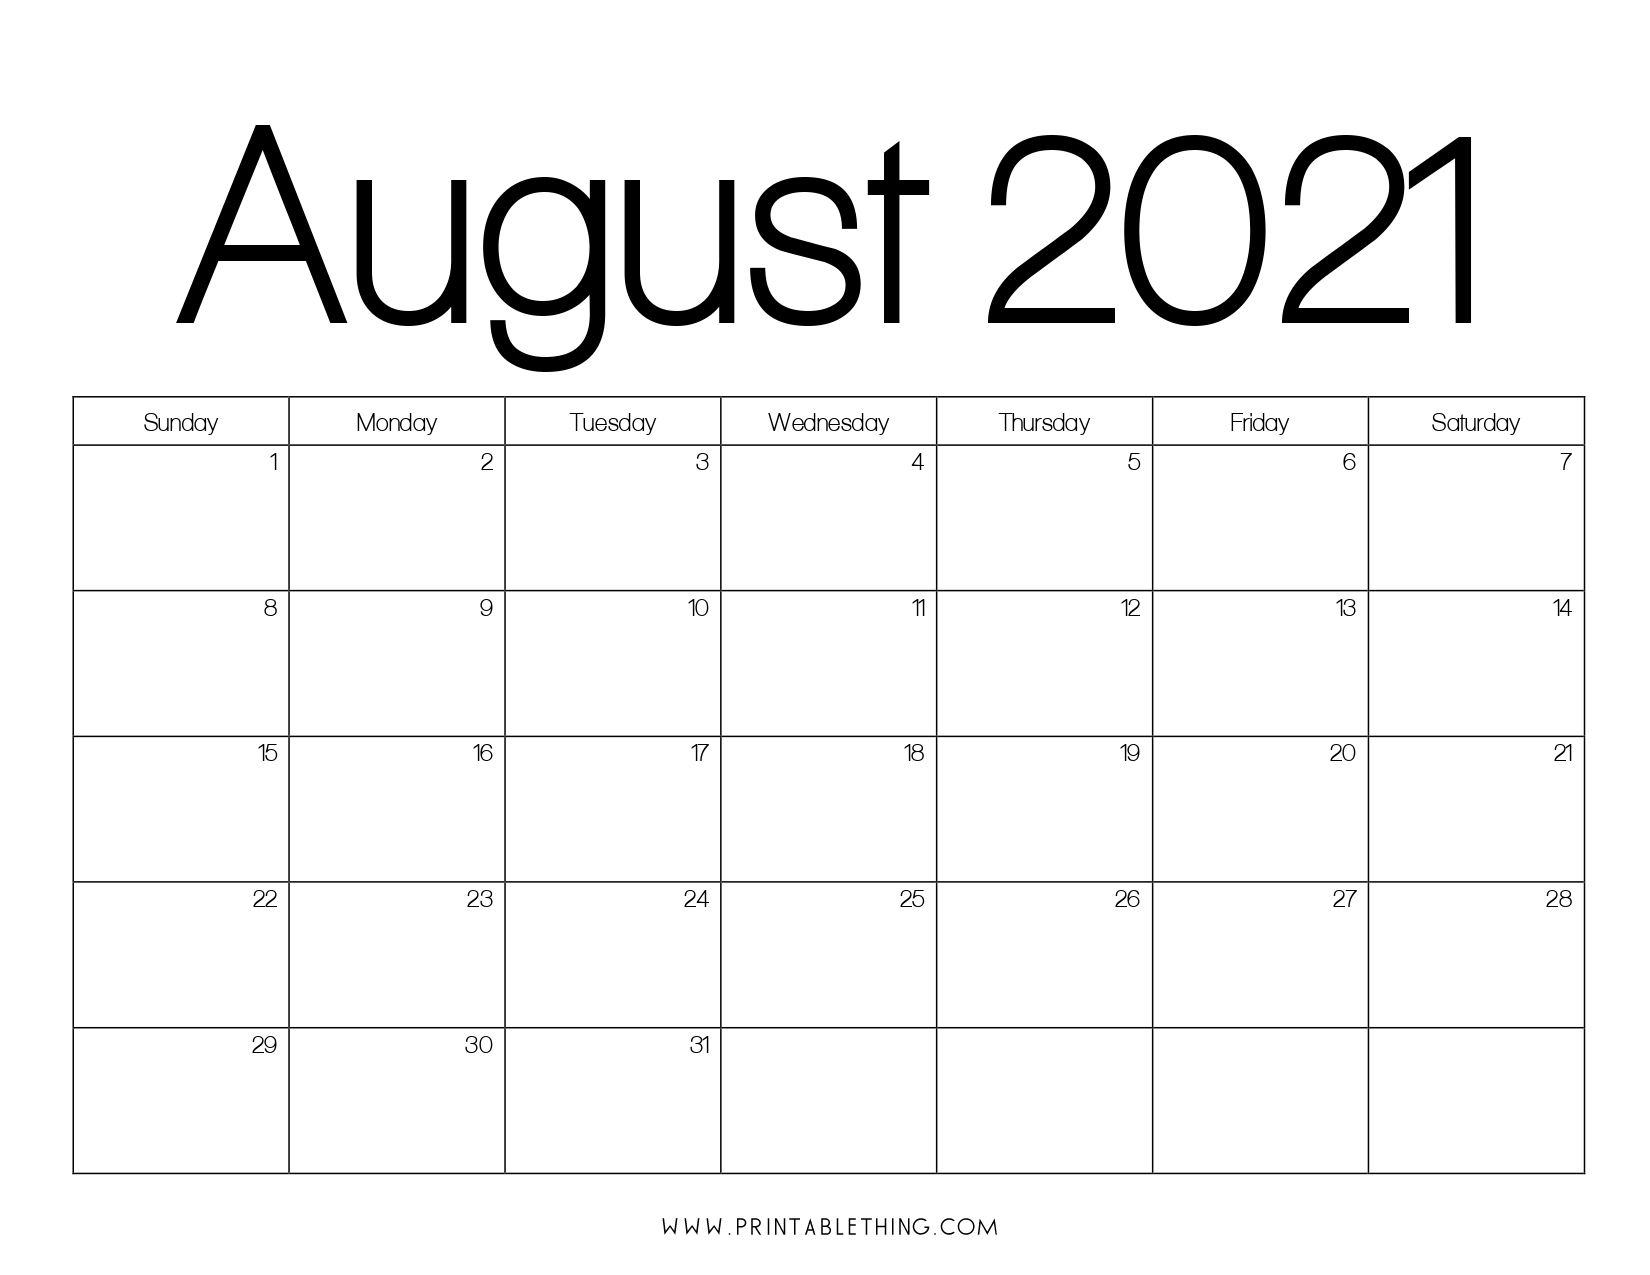 August 2021 Calendar Pdf, August 2021 Calendar Image